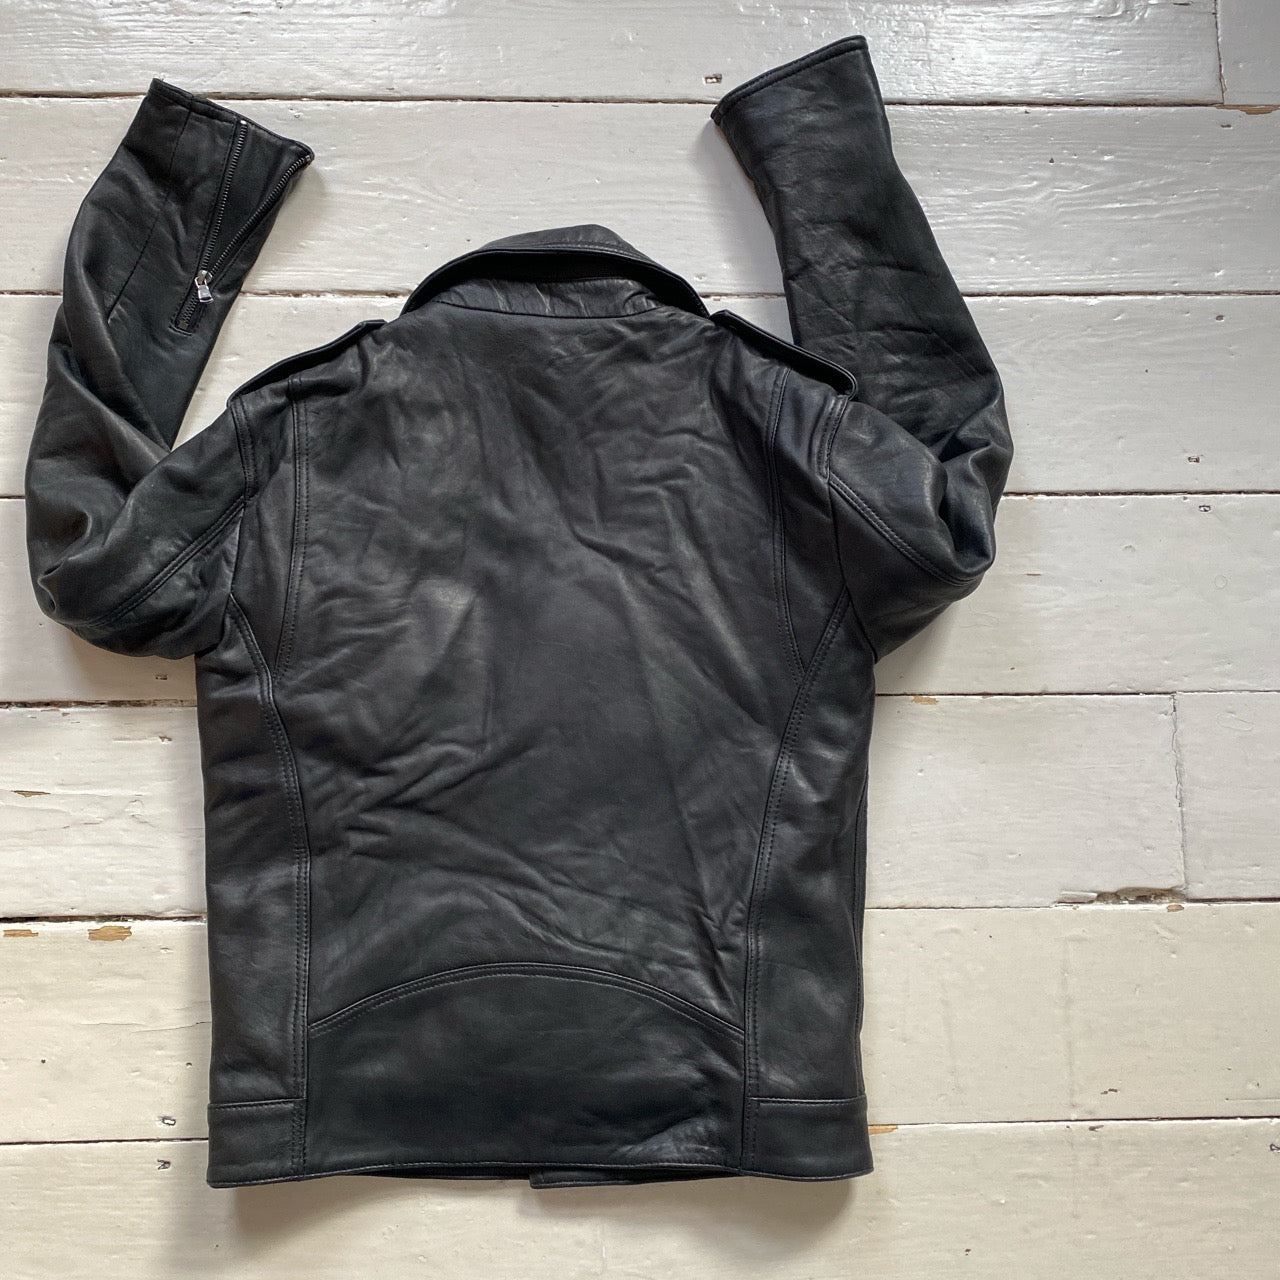 Aviatrix Leather Biker Jacket (Medium)